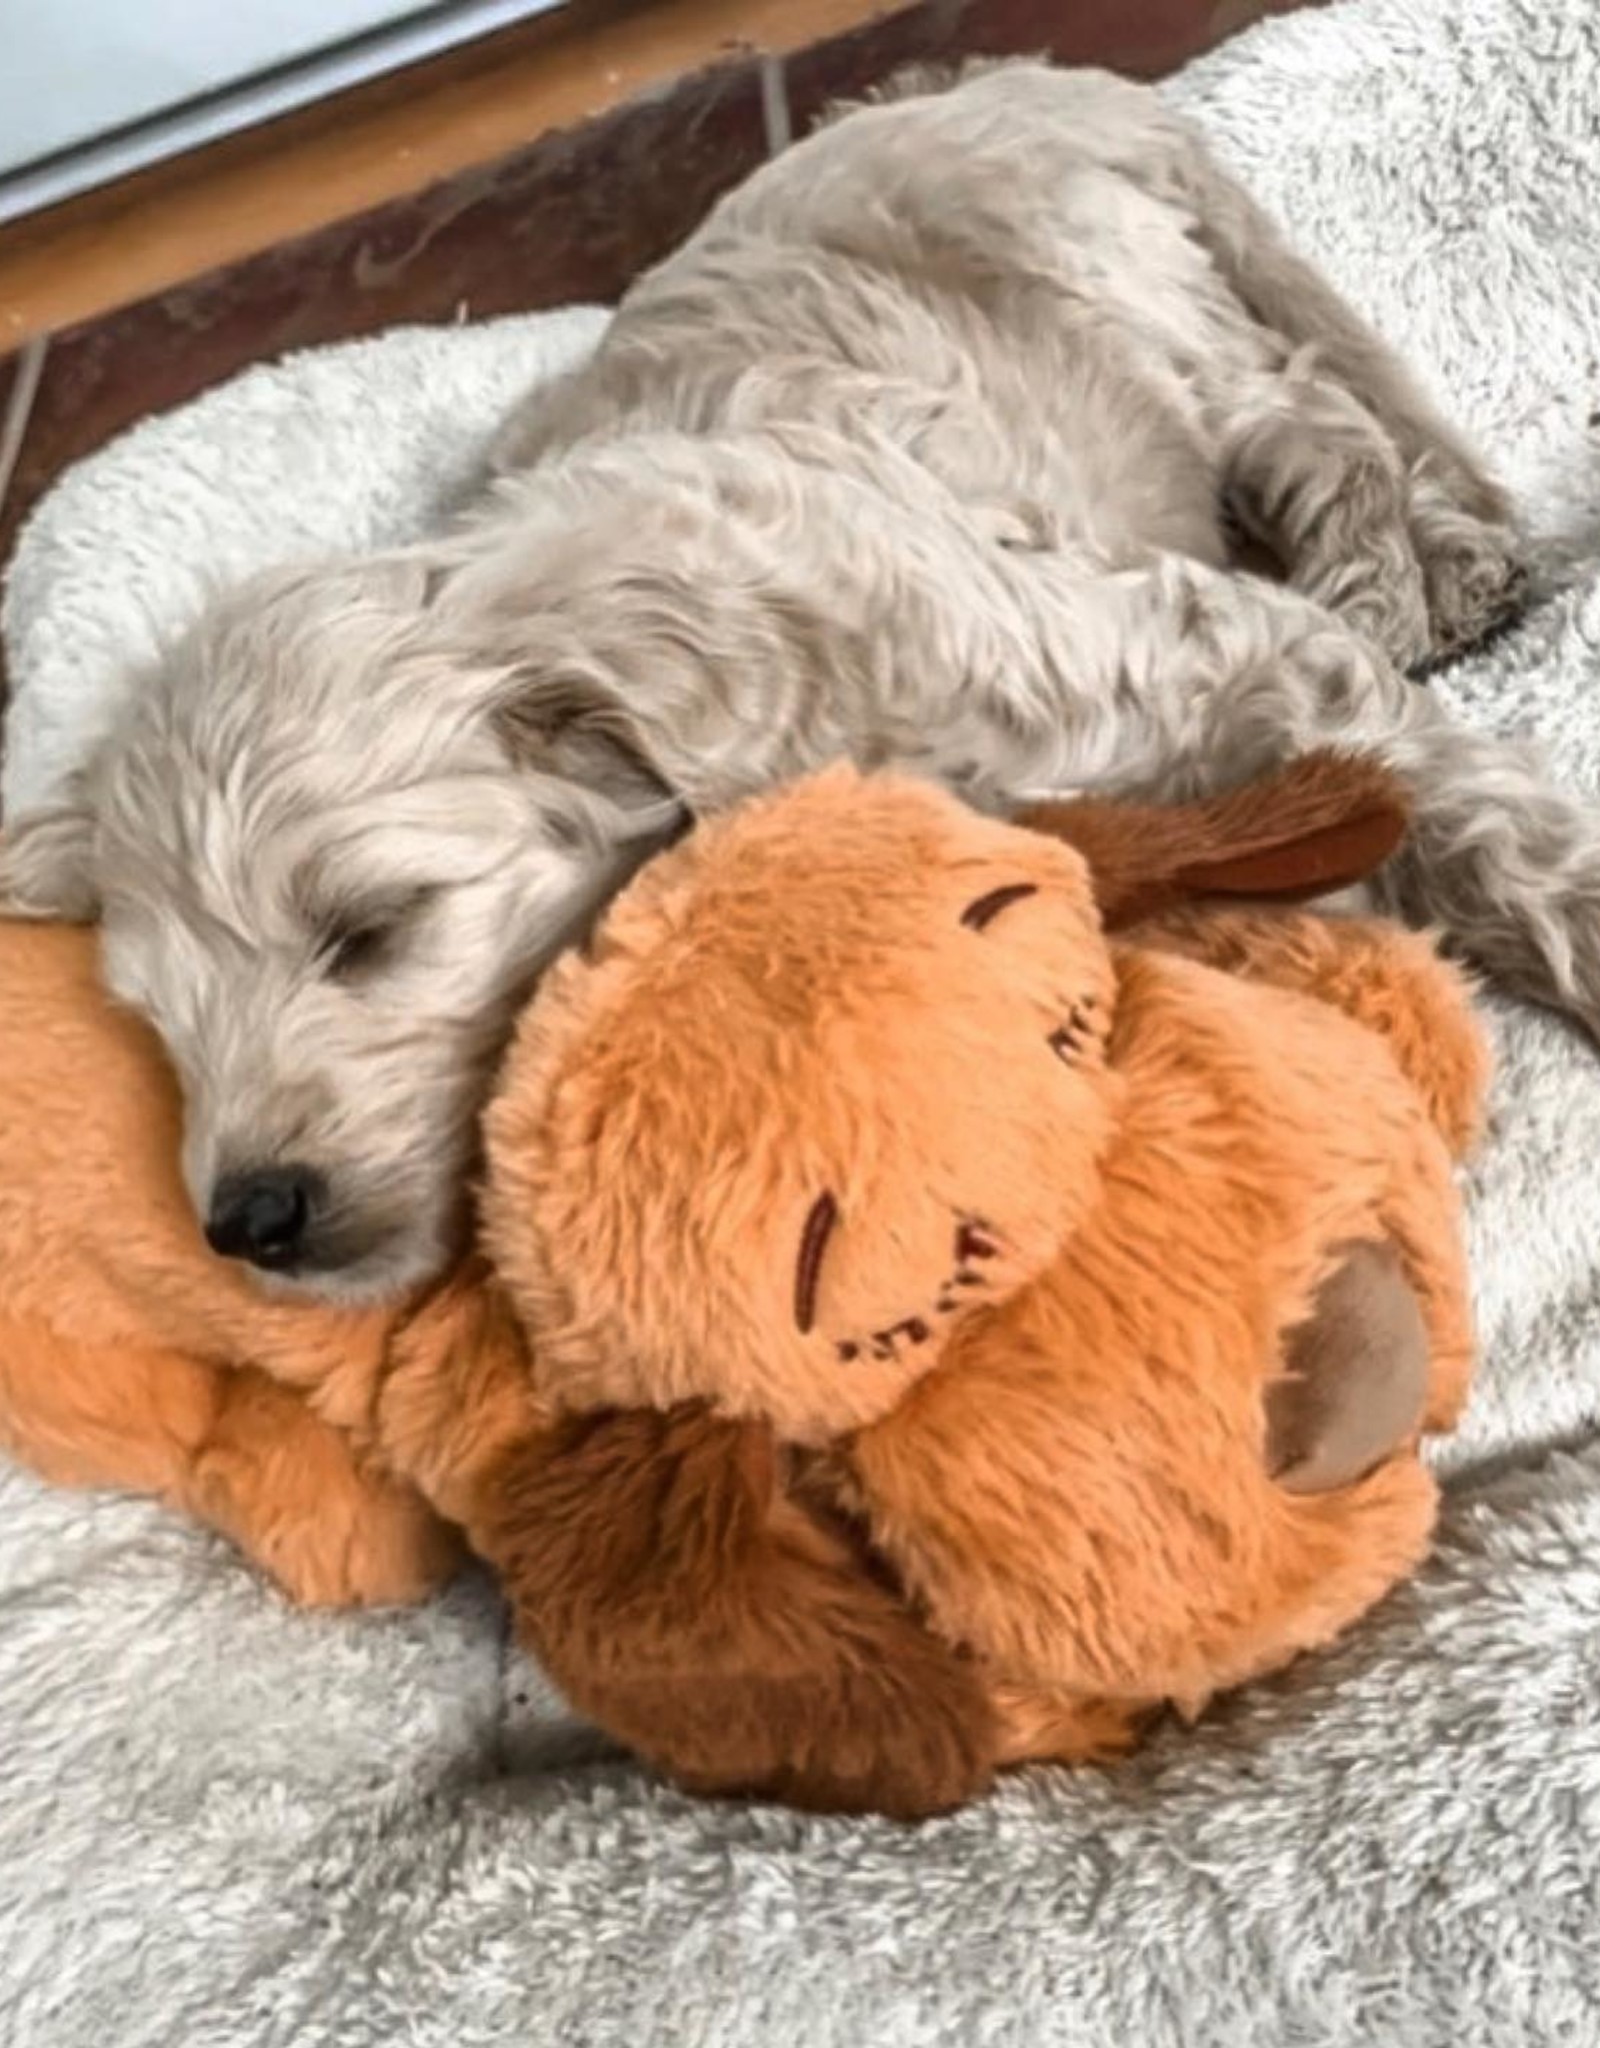 https://cdn.shoplightspeed.com/shops/616591/files/48058476/1600x2048x1/snuggle-puppy-snuggle-puppy.jpg